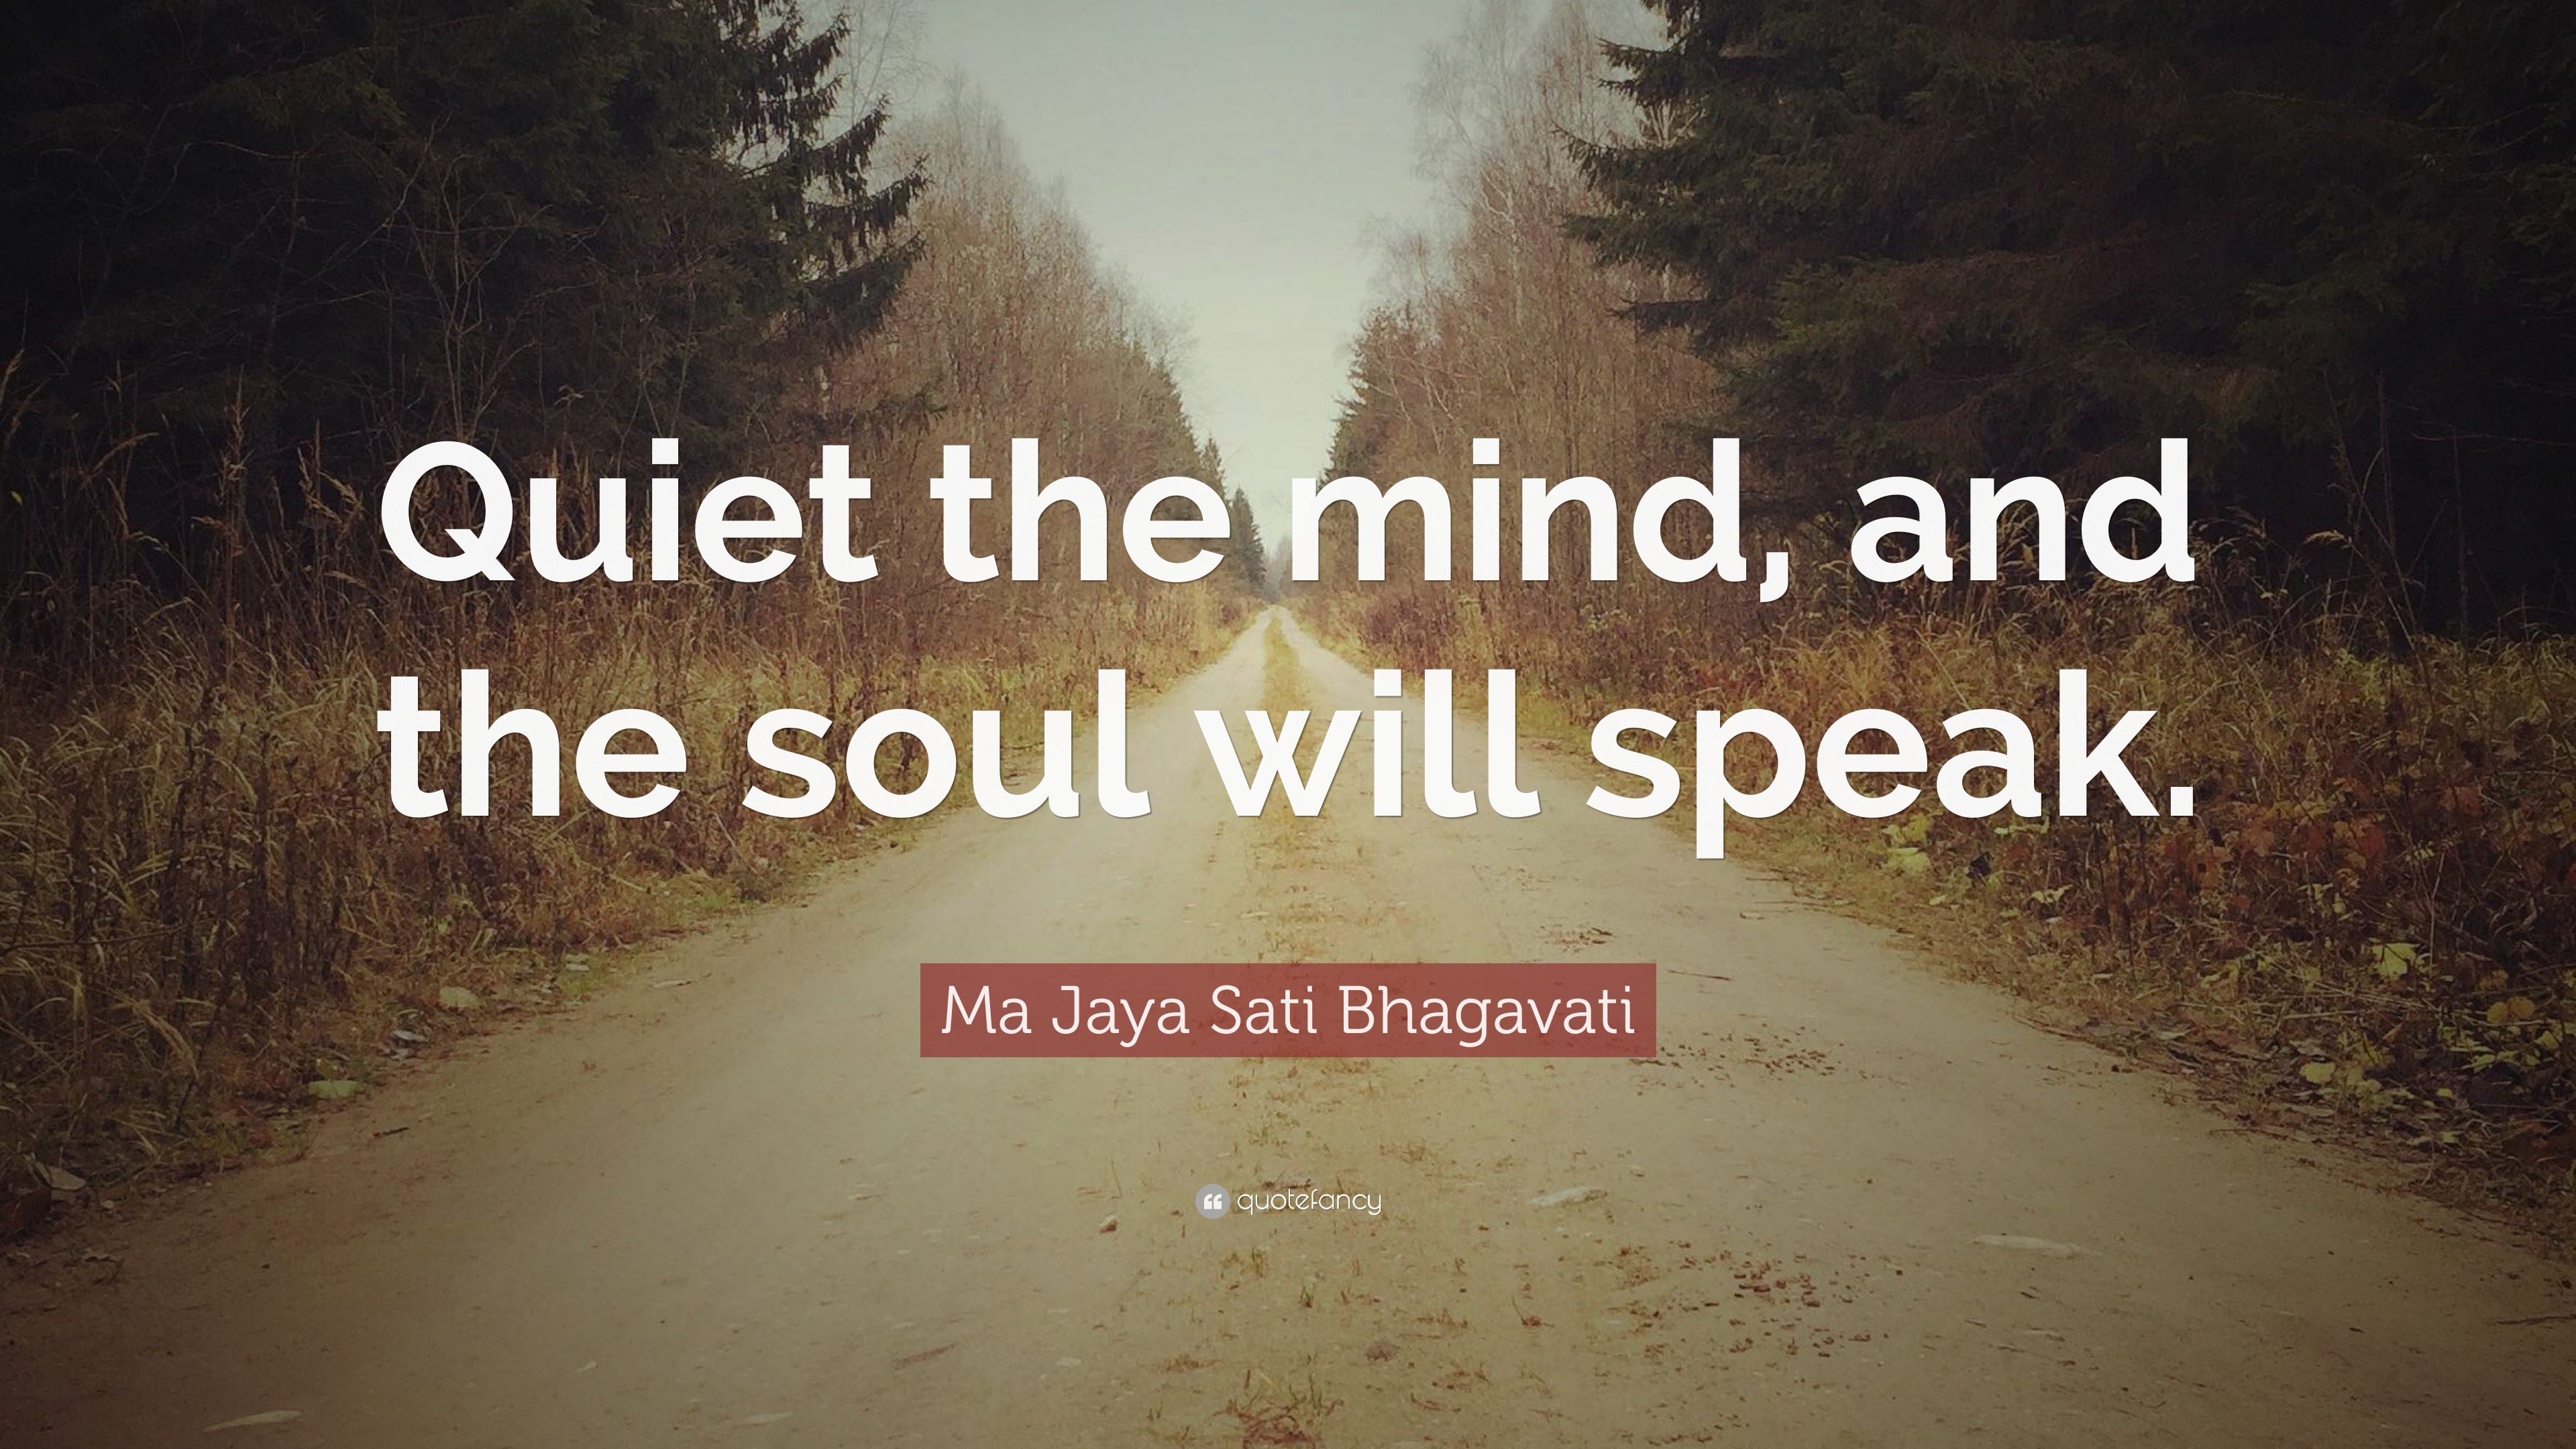 Ma Jaya Sati Bhagavati Quote: “Quiet the mind, and the soul will speak.”